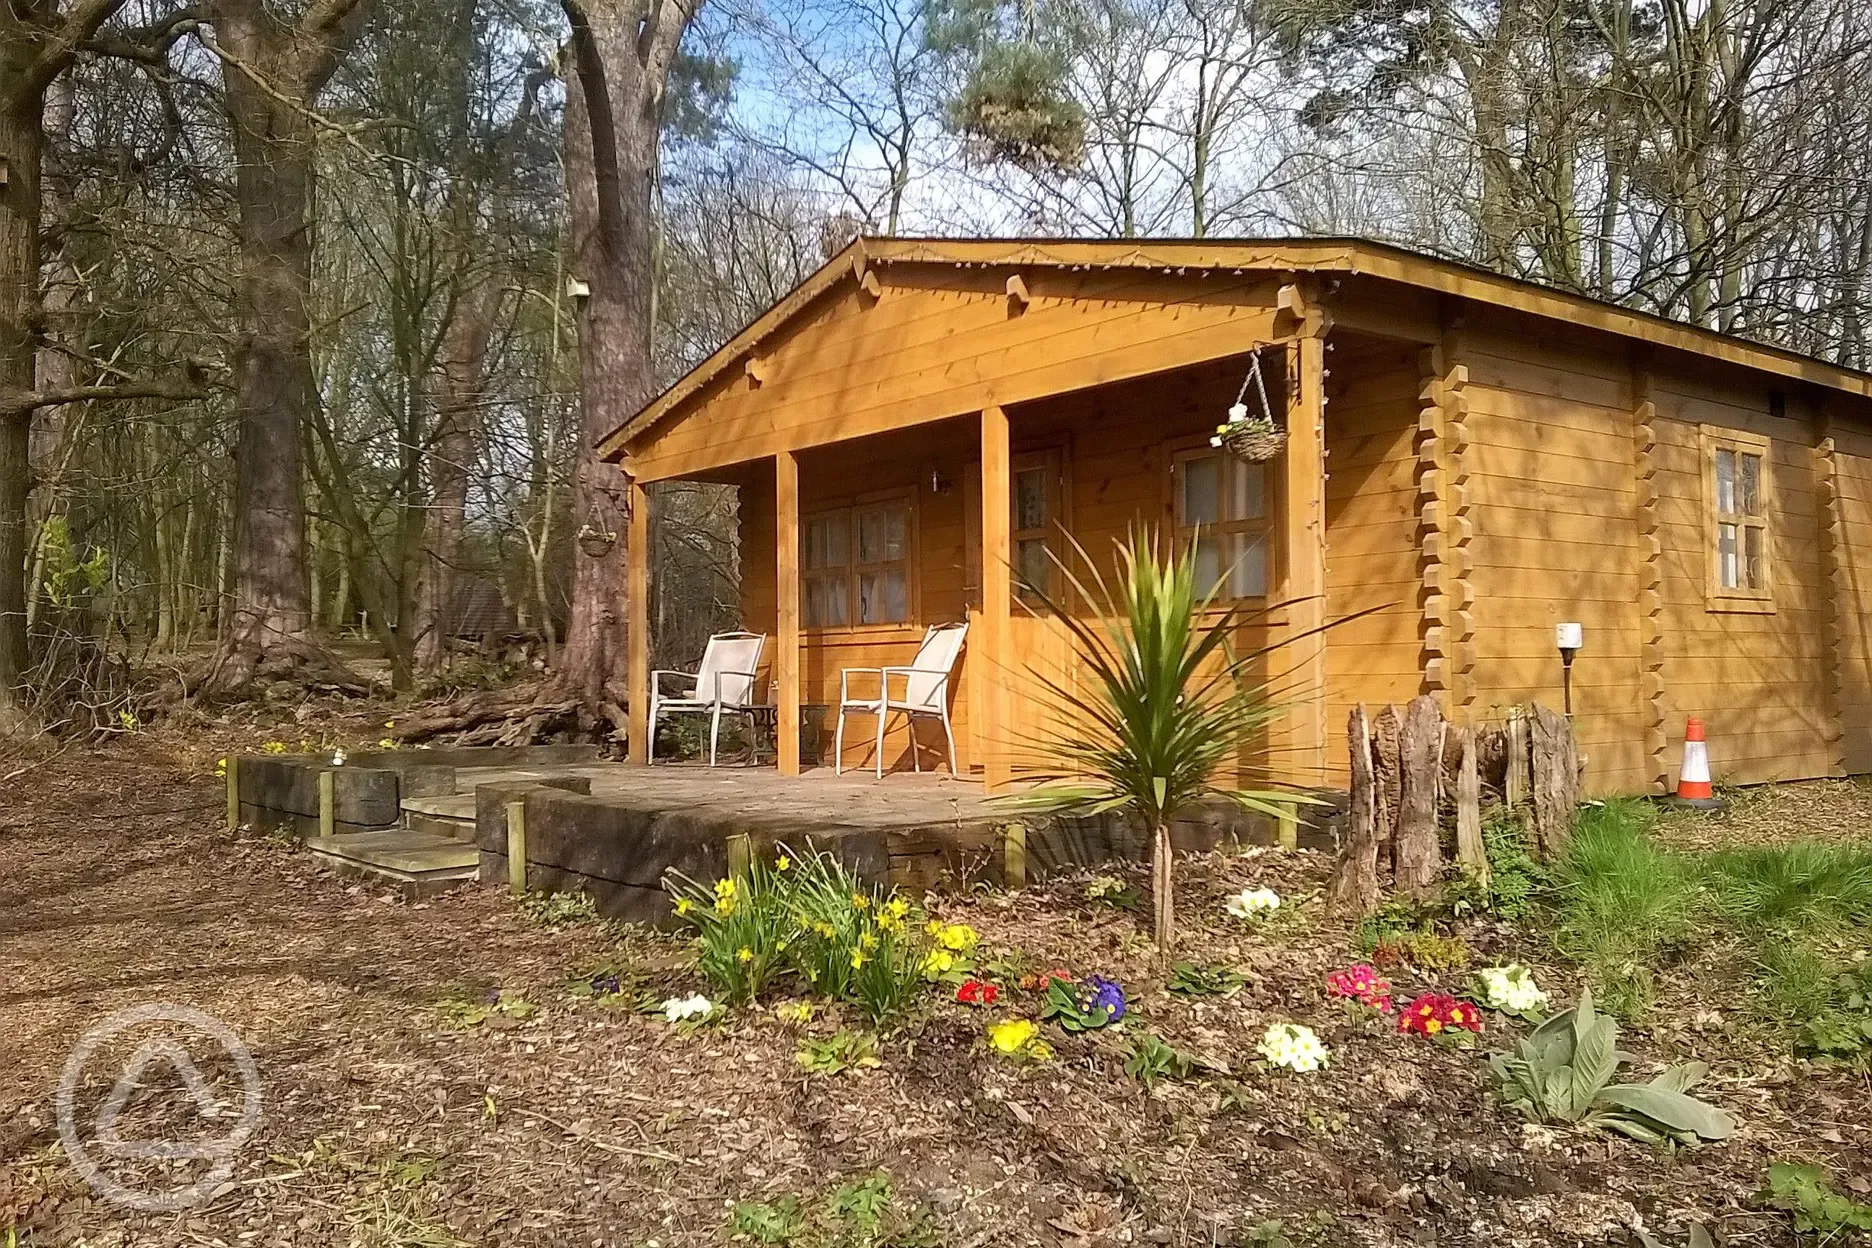 Woodland Lodge in Springtime